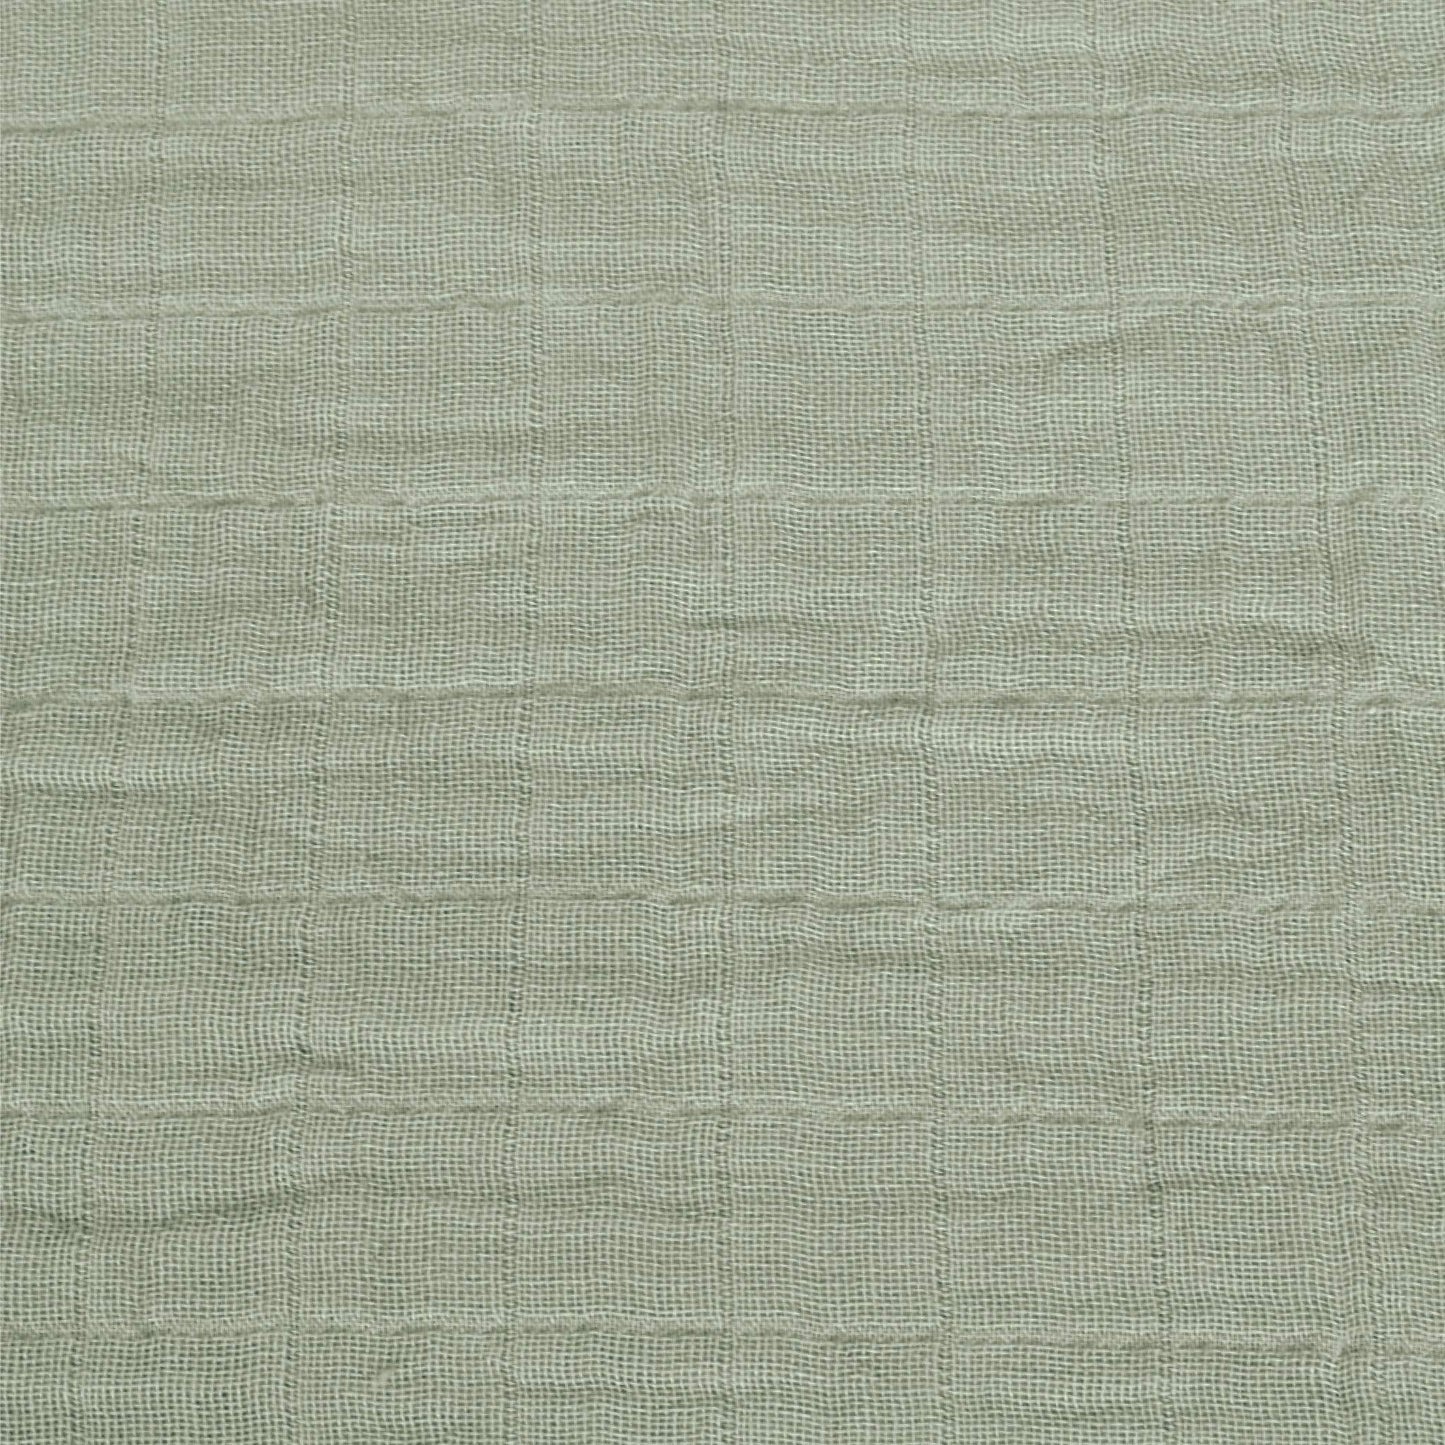 Cotton muslin fitted sheet - Kaki